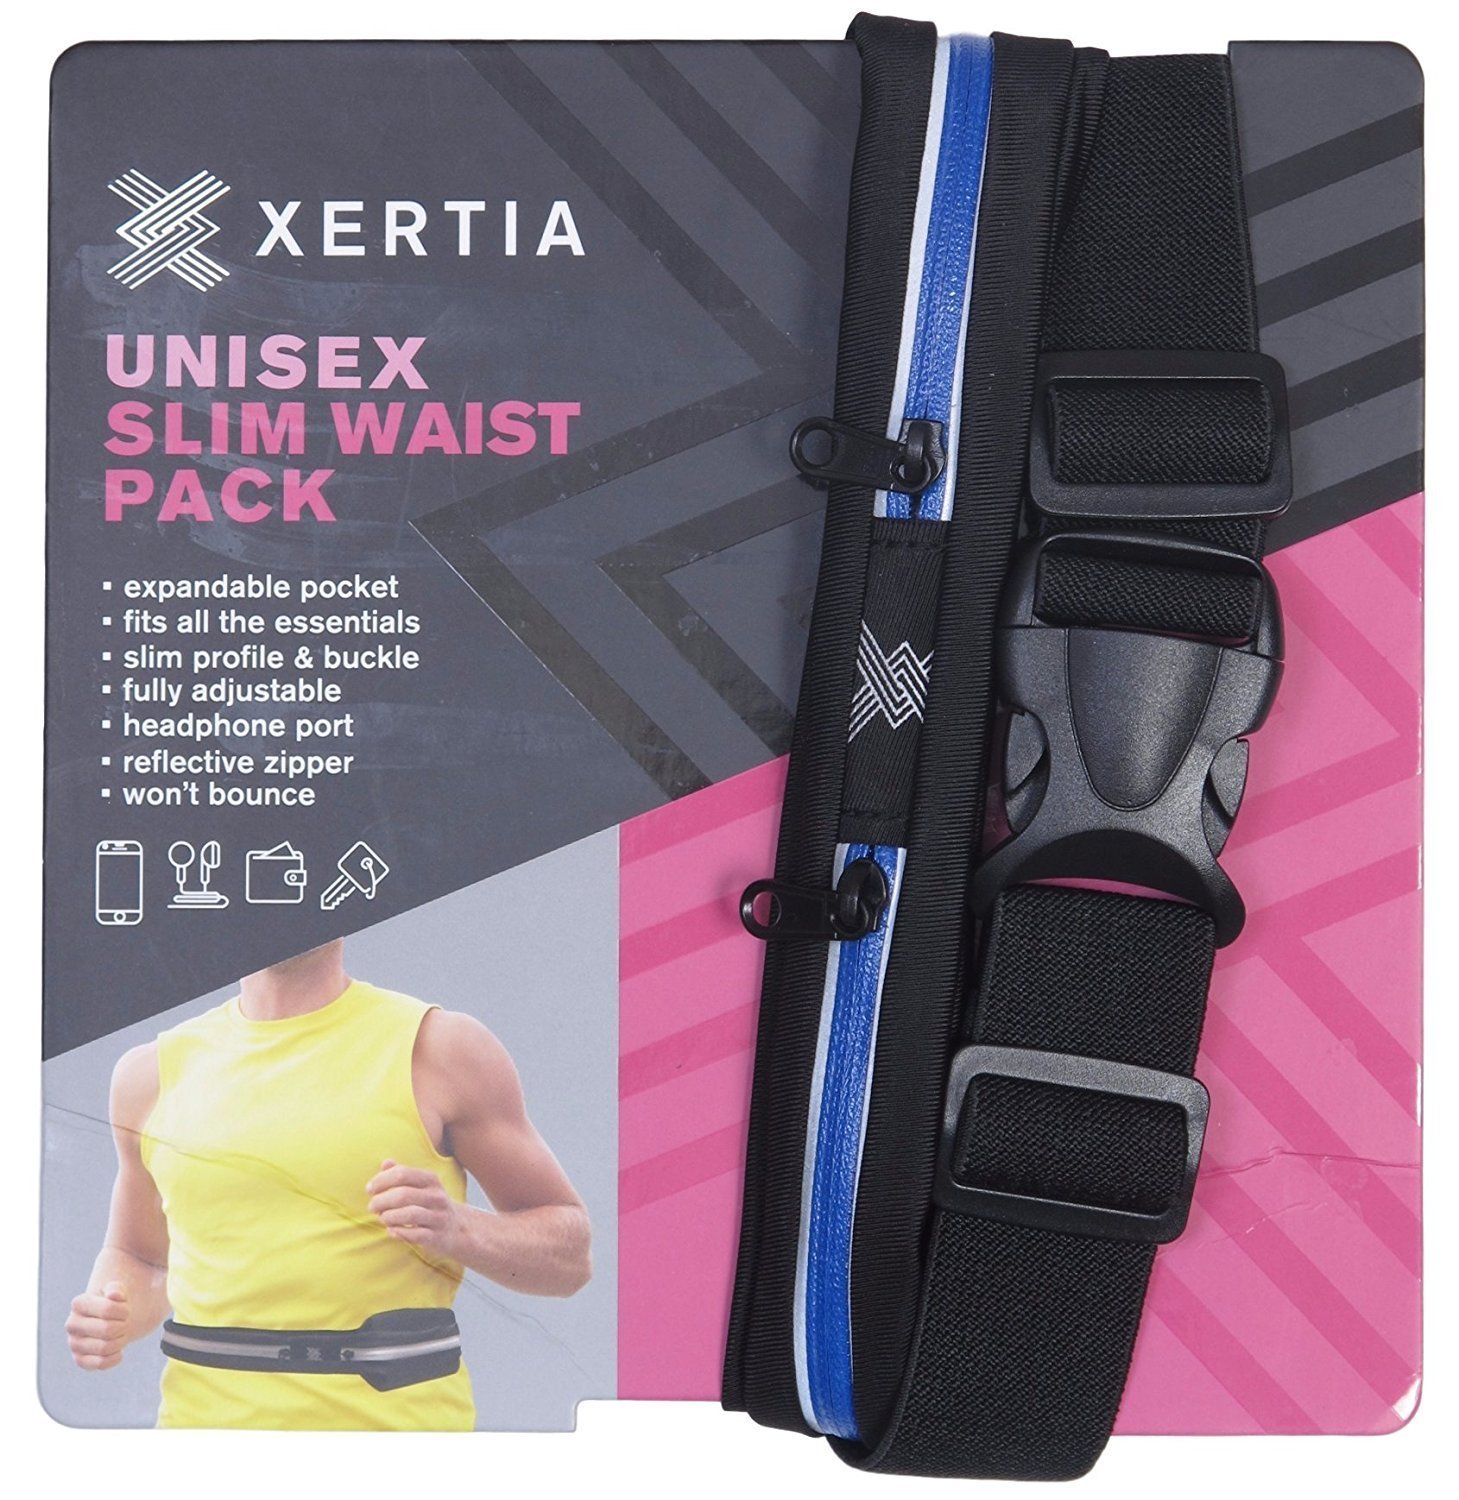 XERTIA Slim Waist Running Pack iPhone X 6 7 8 Plus Pouch for Runners, Blue (Unisex) - image 1 of 8